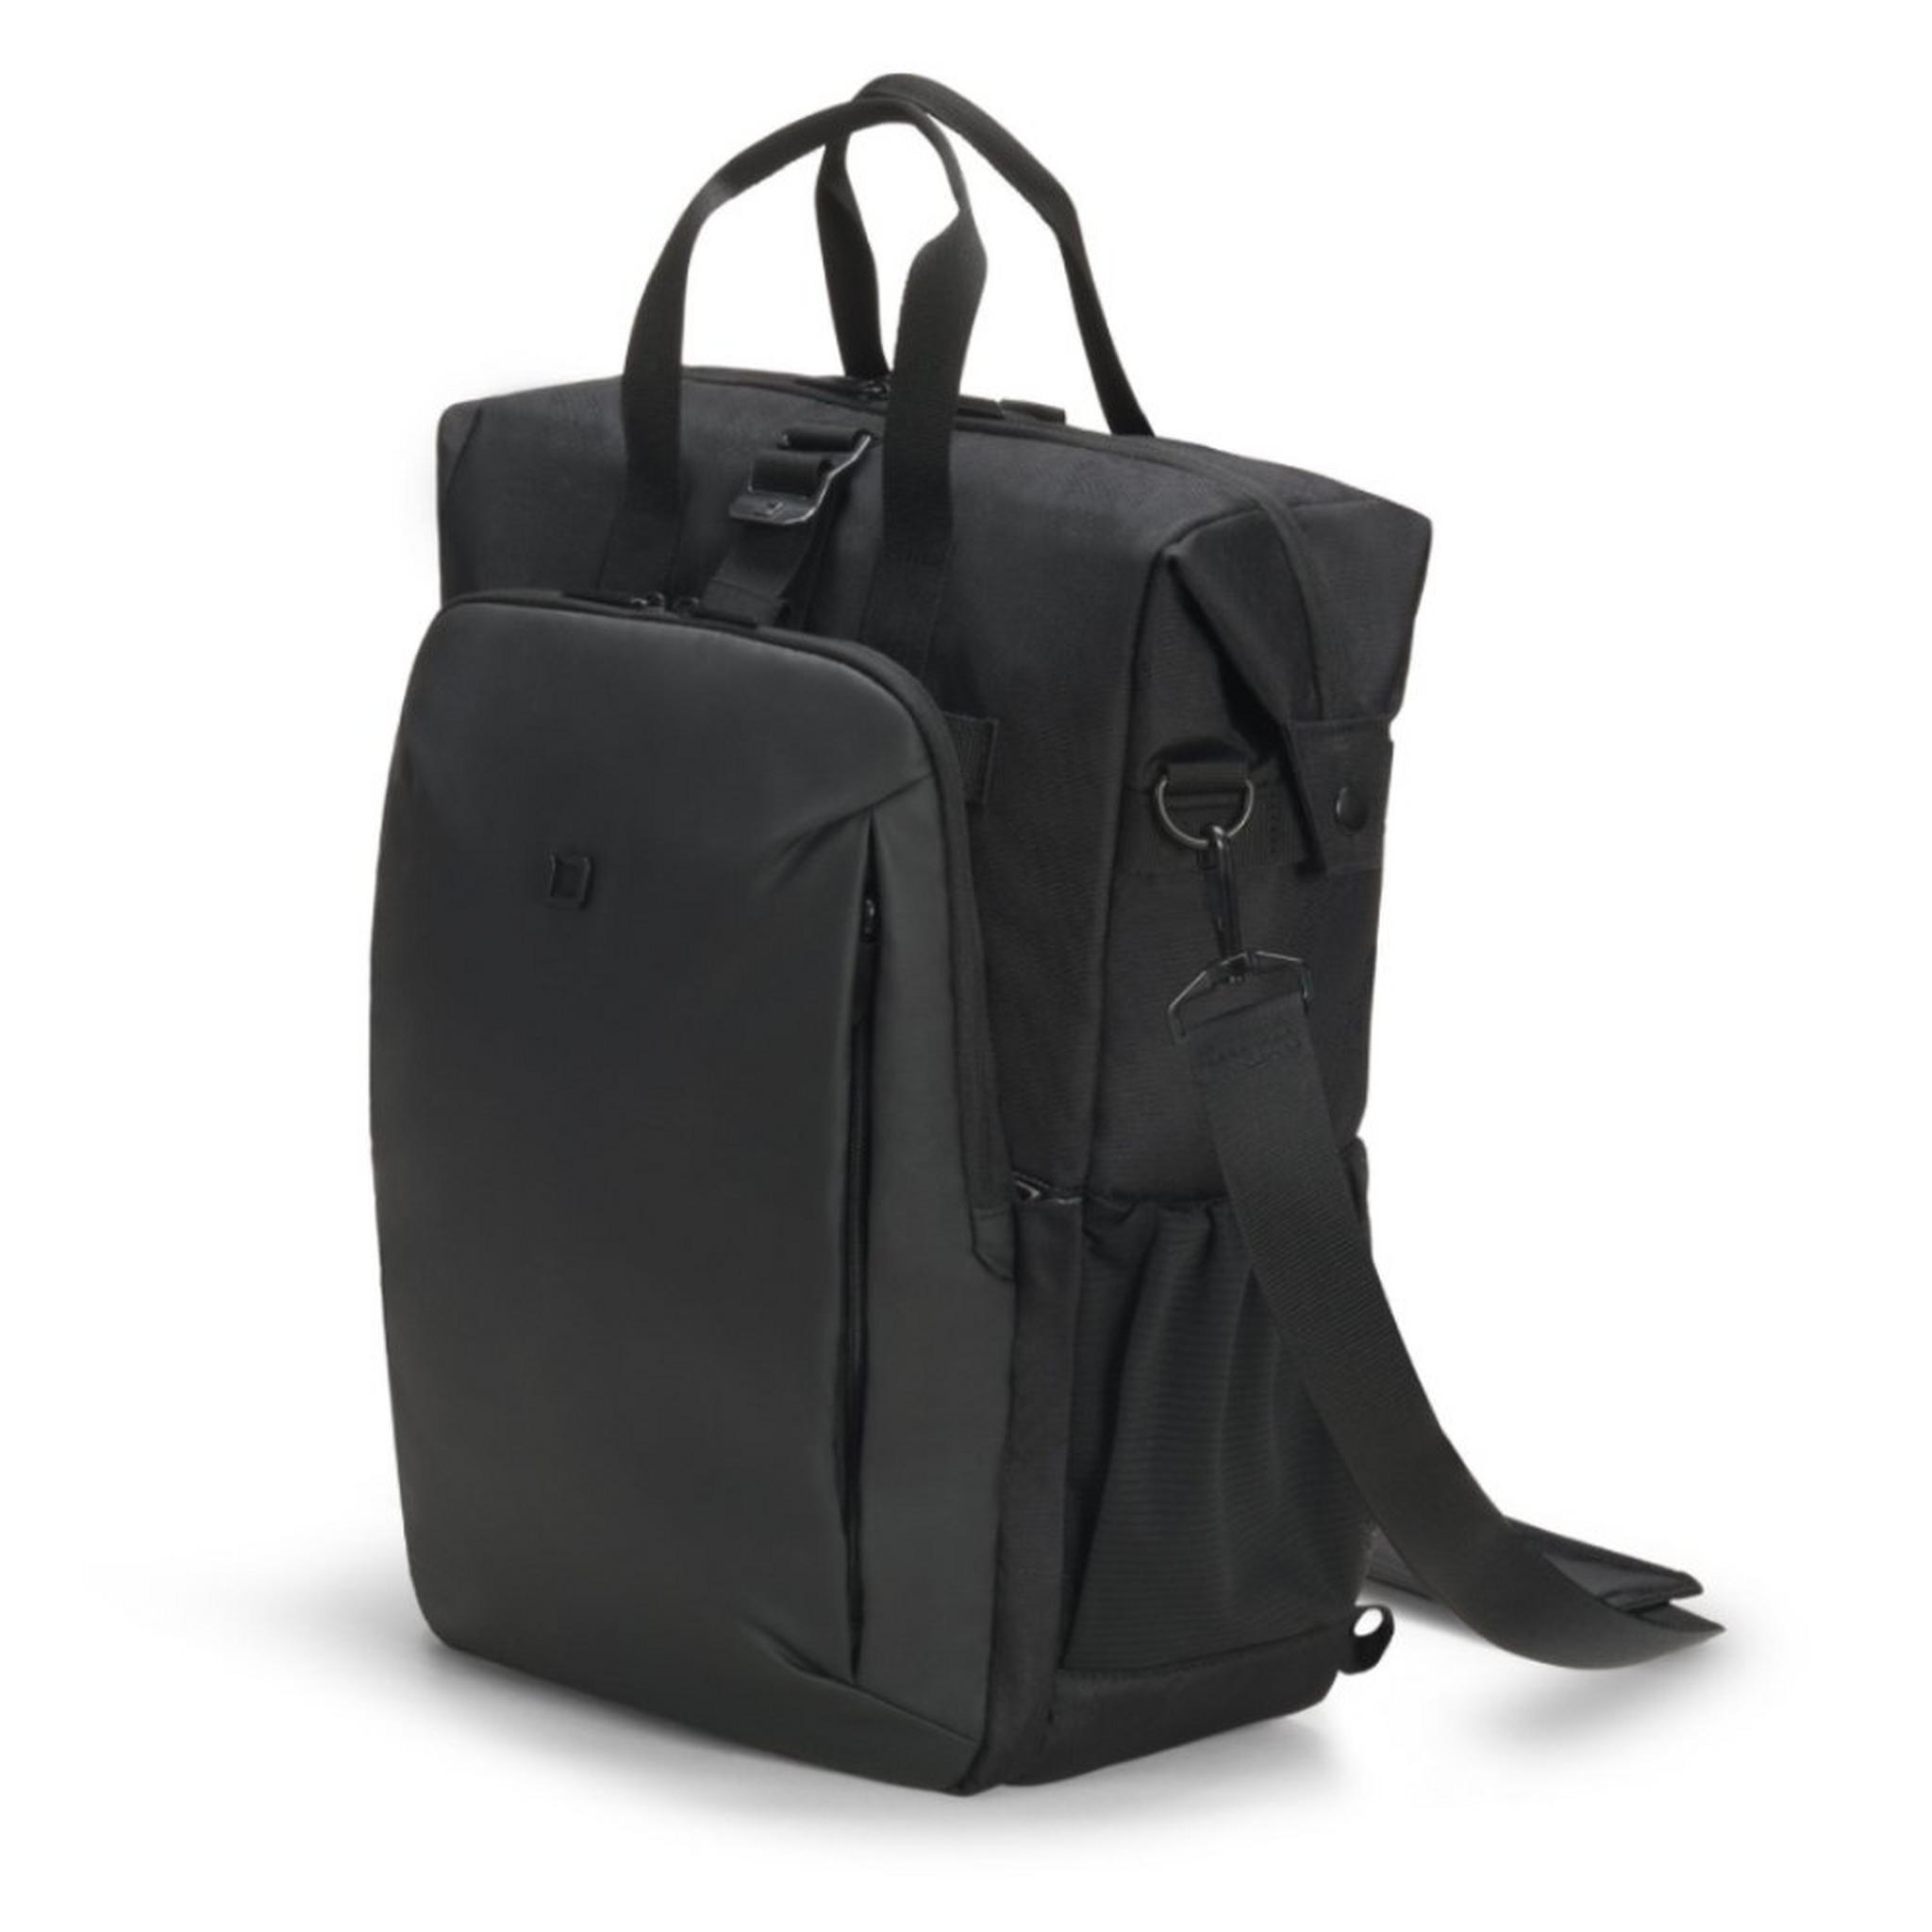 Dicota Eco Dual Go Backpack 15.6-inch Laptop Black Price | Shop Online ...